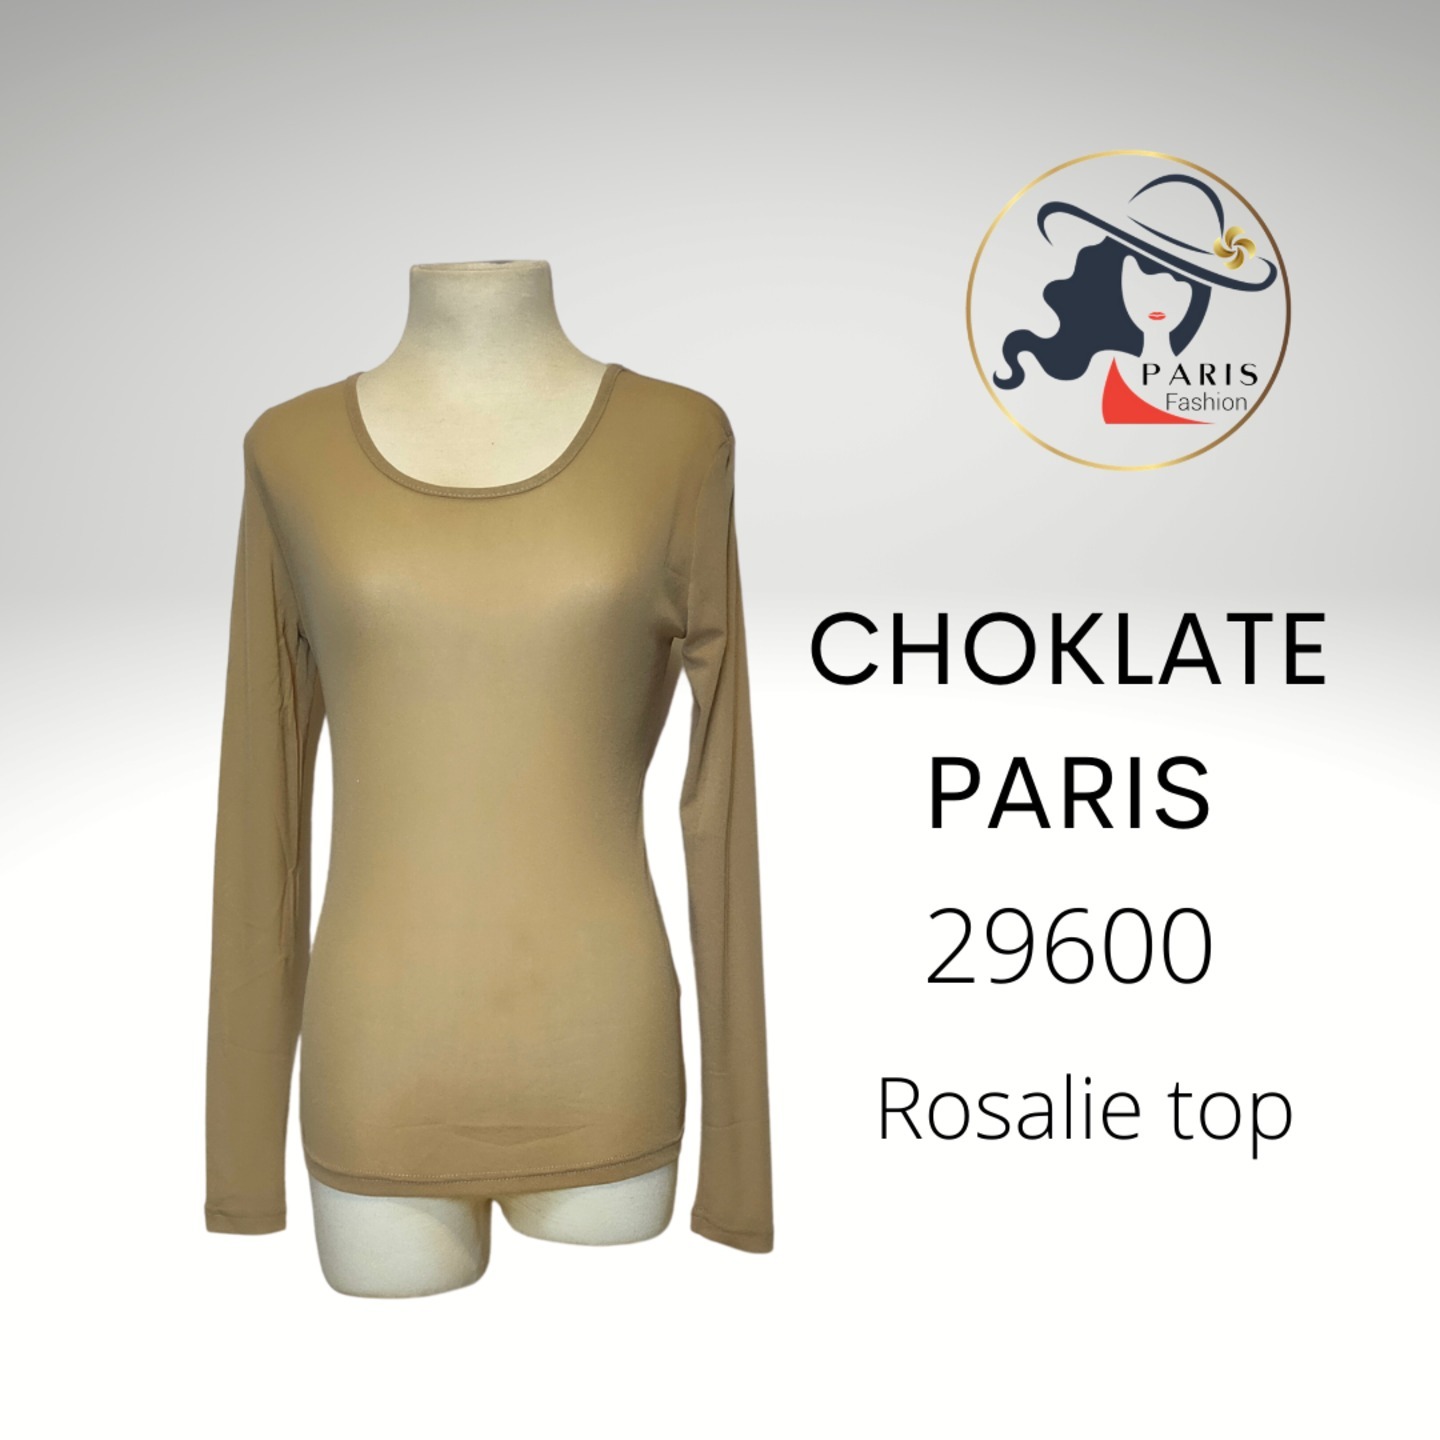 CHOKLATE PARIS 29600 ROSALIE TOP